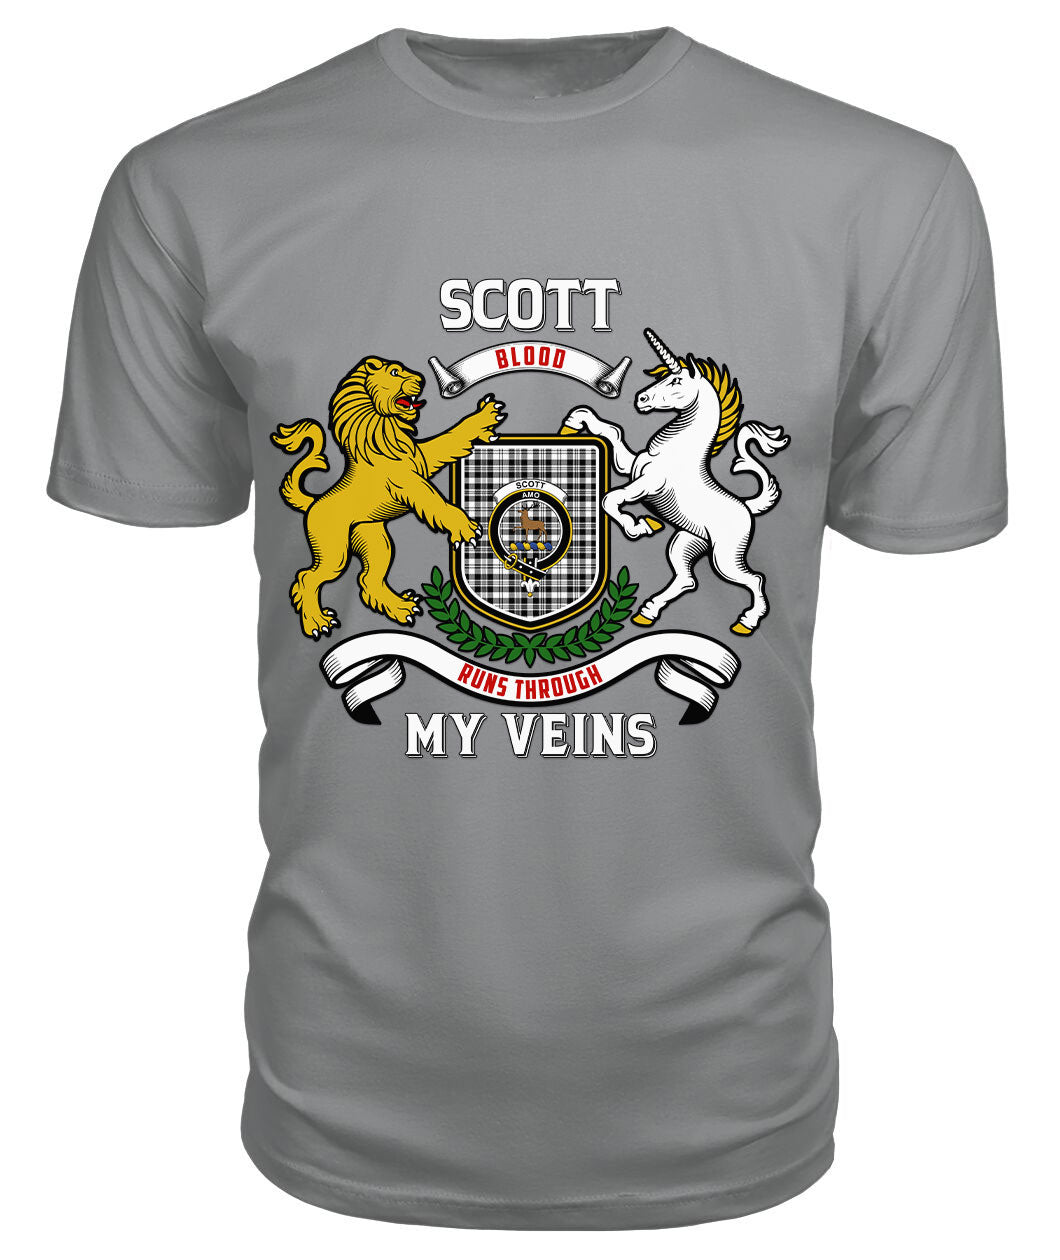 Scott Black & White Modern Tartan Crest 2D T-shirt - Blood Runs Through My Veins Style